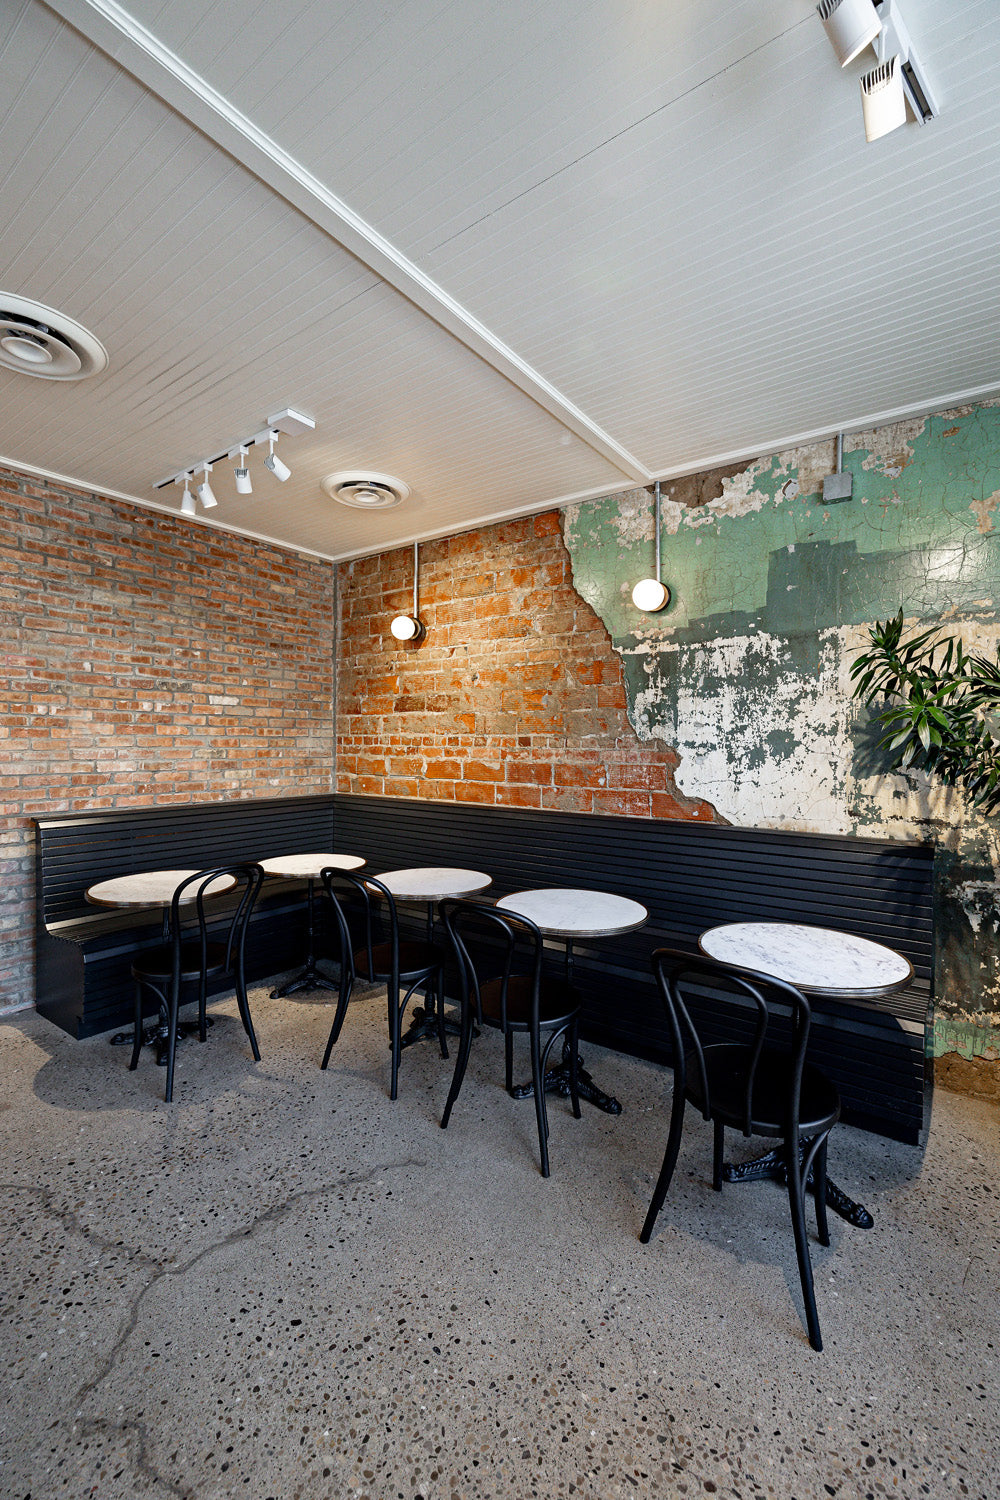 Restaurant seating by Edgework Creative